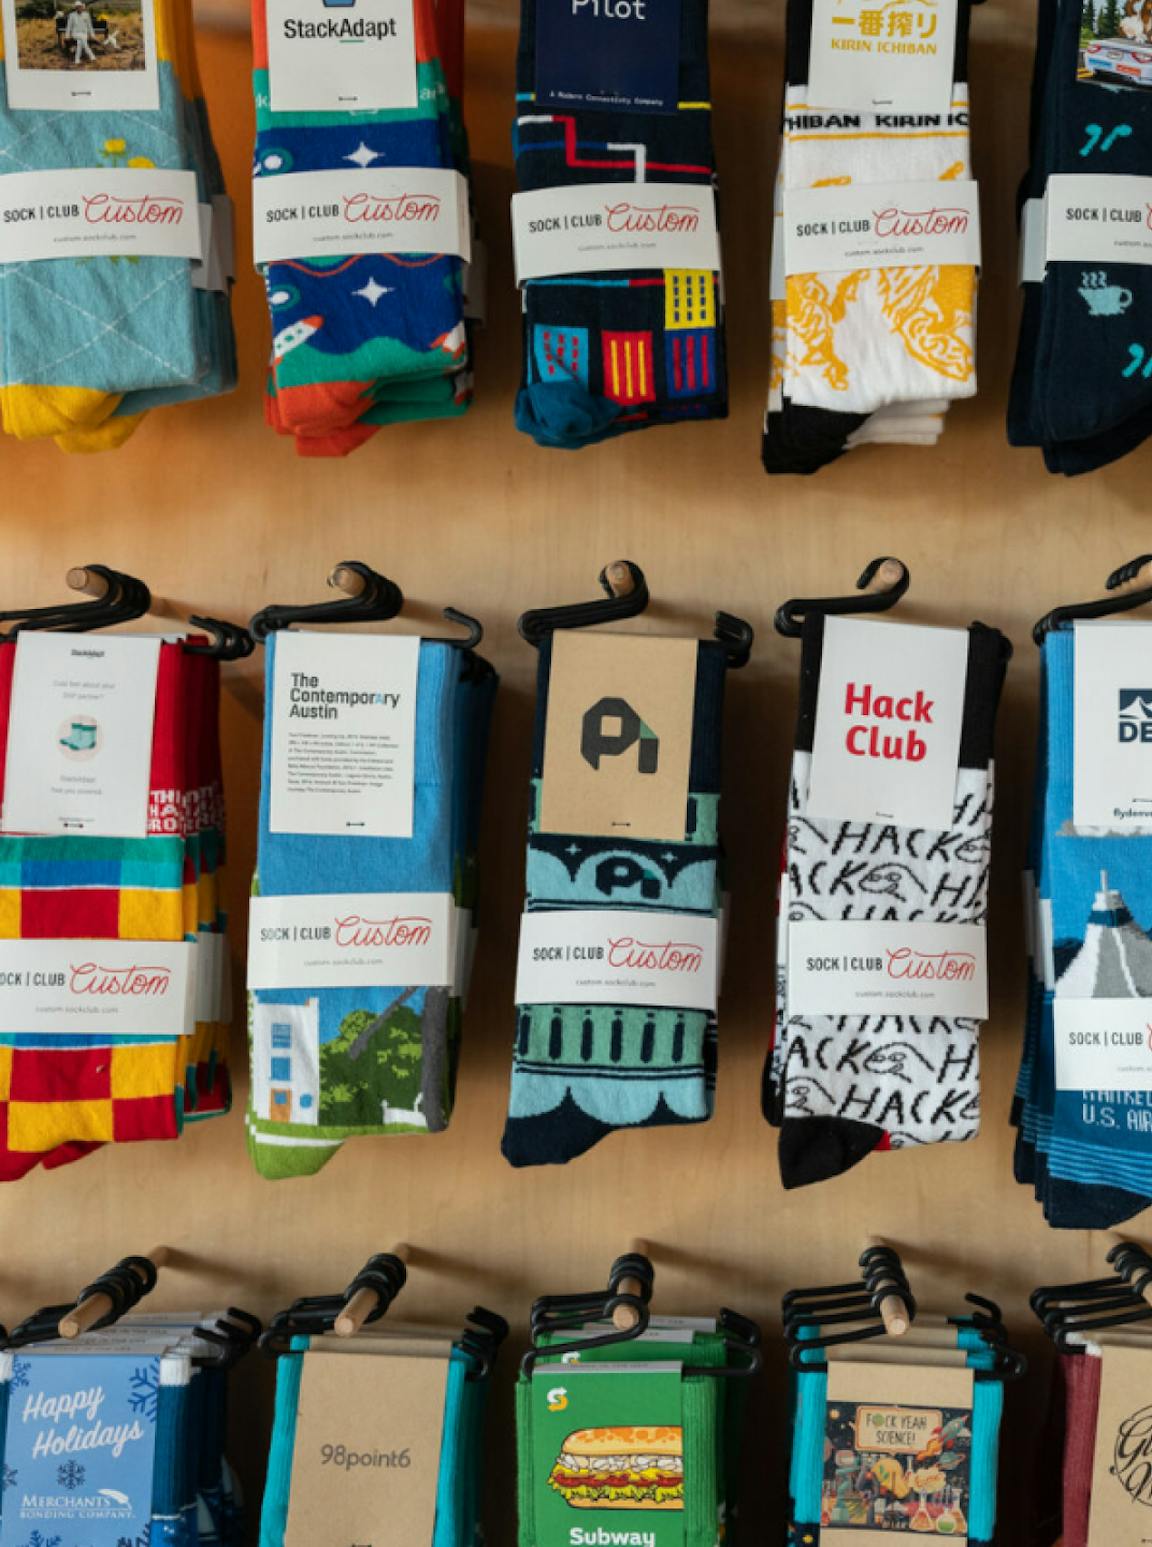 Wall of branded socks in Sock Club headqurters 